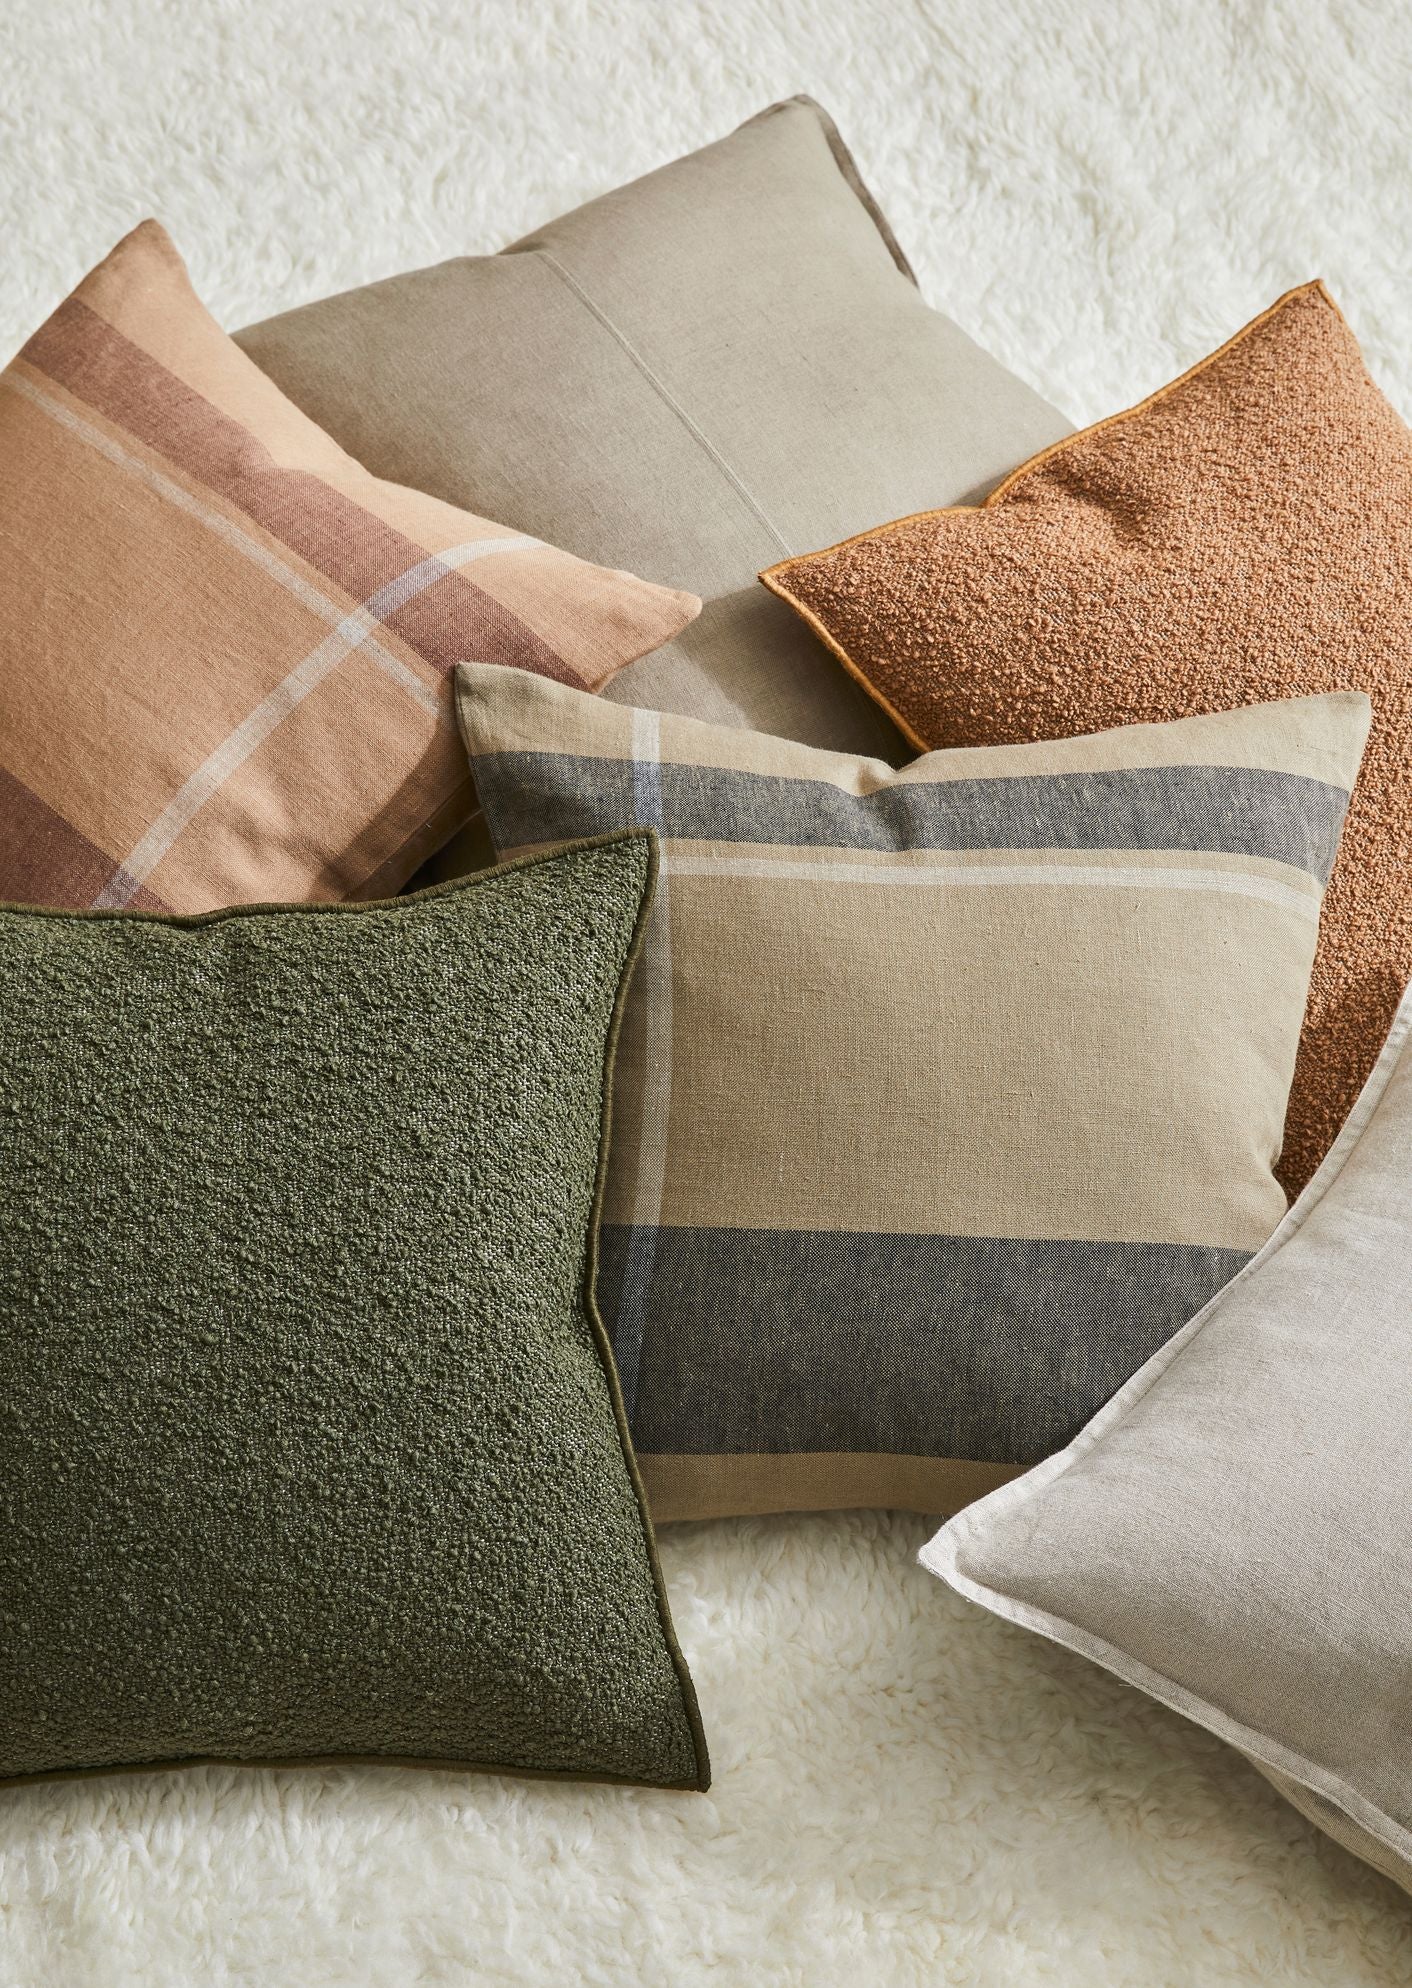 Dante cushions, linen cushion from weave